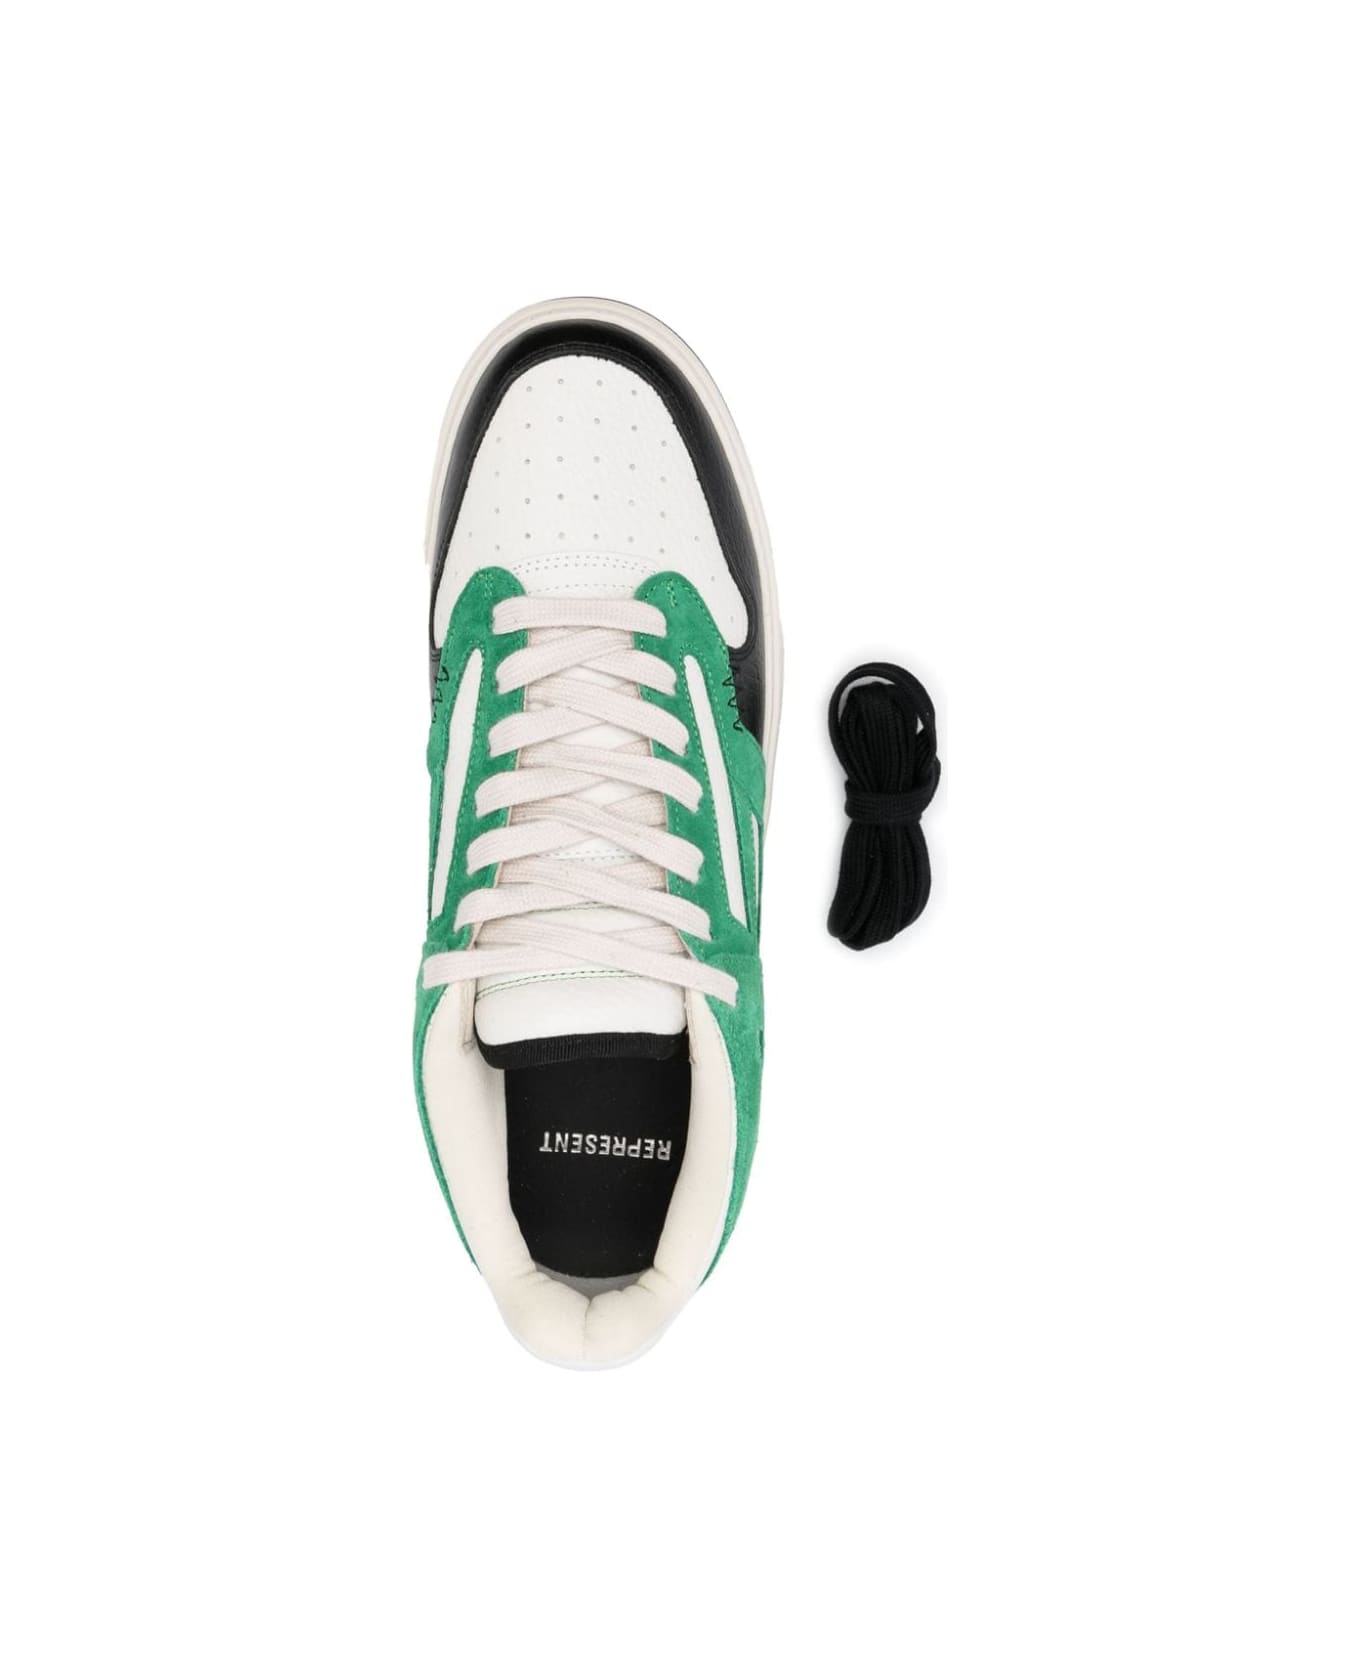 REPRESENT Reptor Sneakers - Island Green Vintage White Black スニーカー